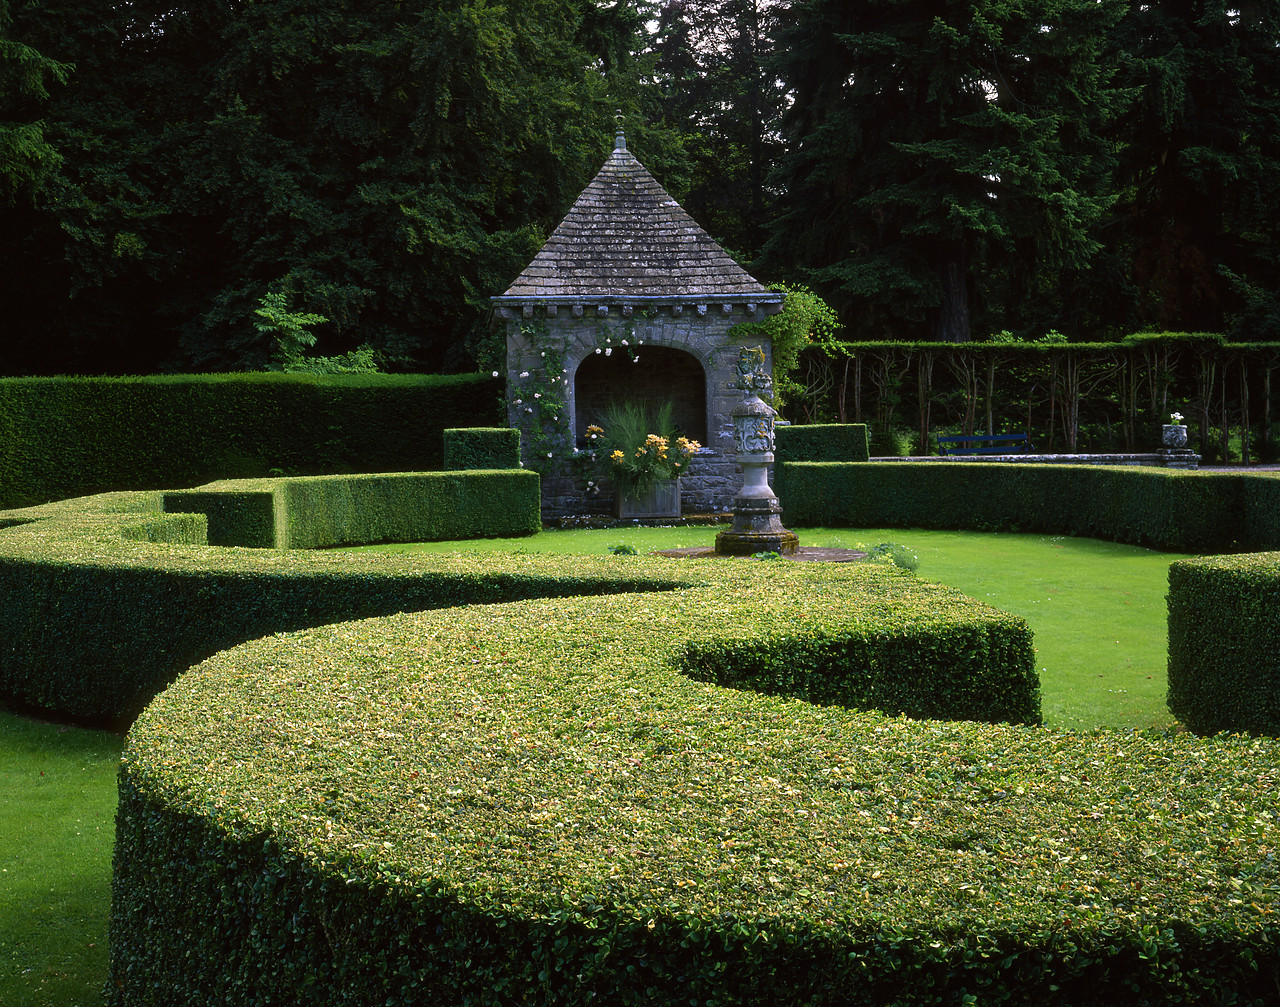 #970389-1 - Italian Garden, Glamis Castle, Tayside Region, Scotland